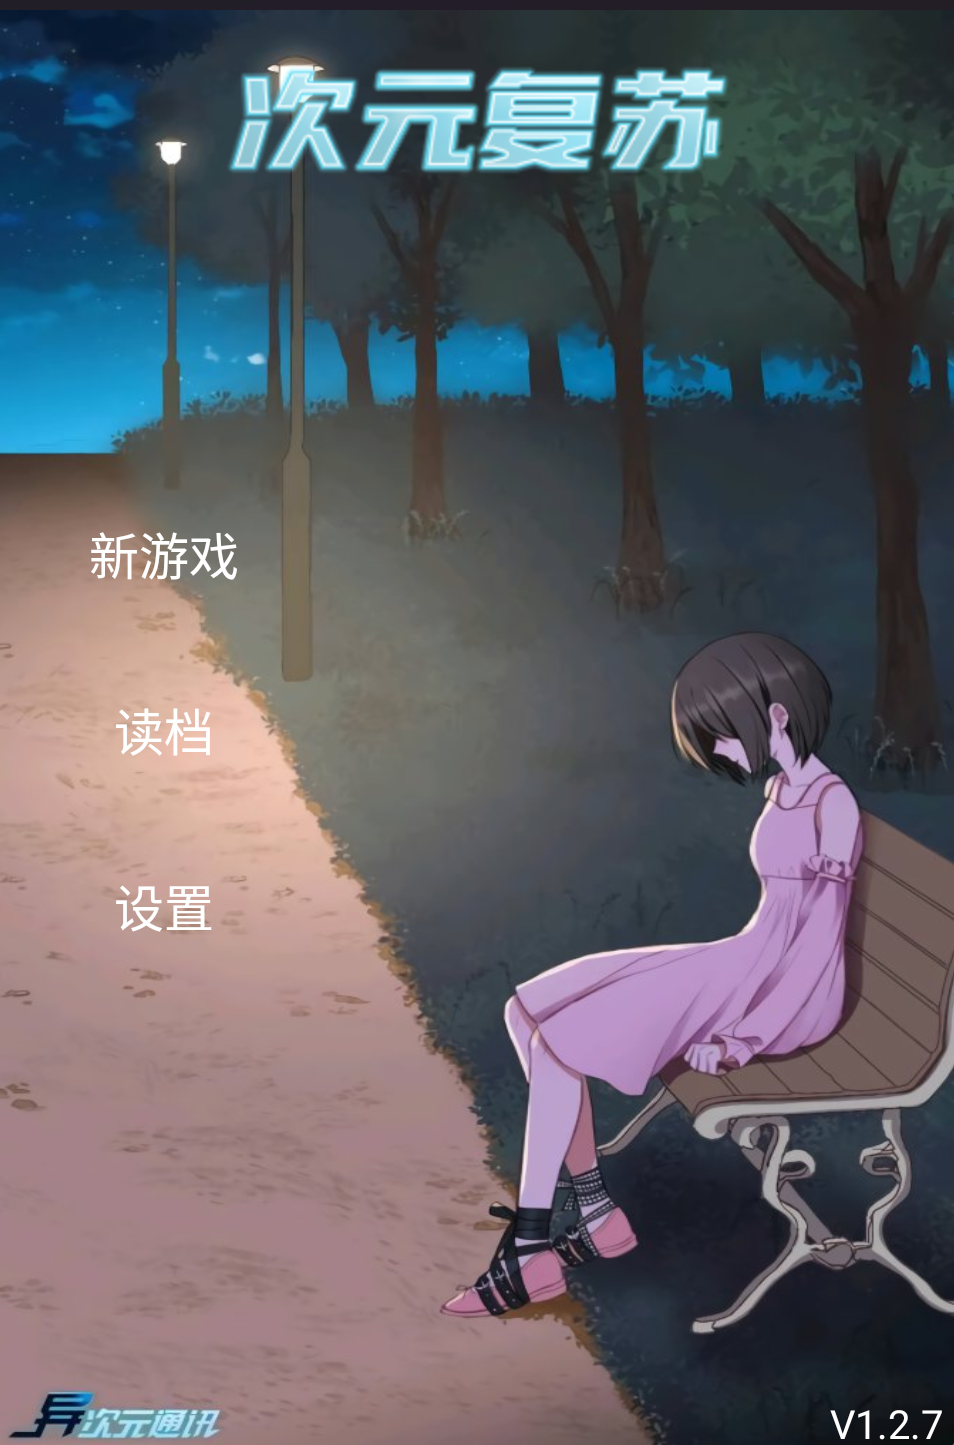 Screenshot 1 of ការទំនាក់ទំនងវិមាត្រផ្សេងៗគ្នា៖ QI Yuan Edition 